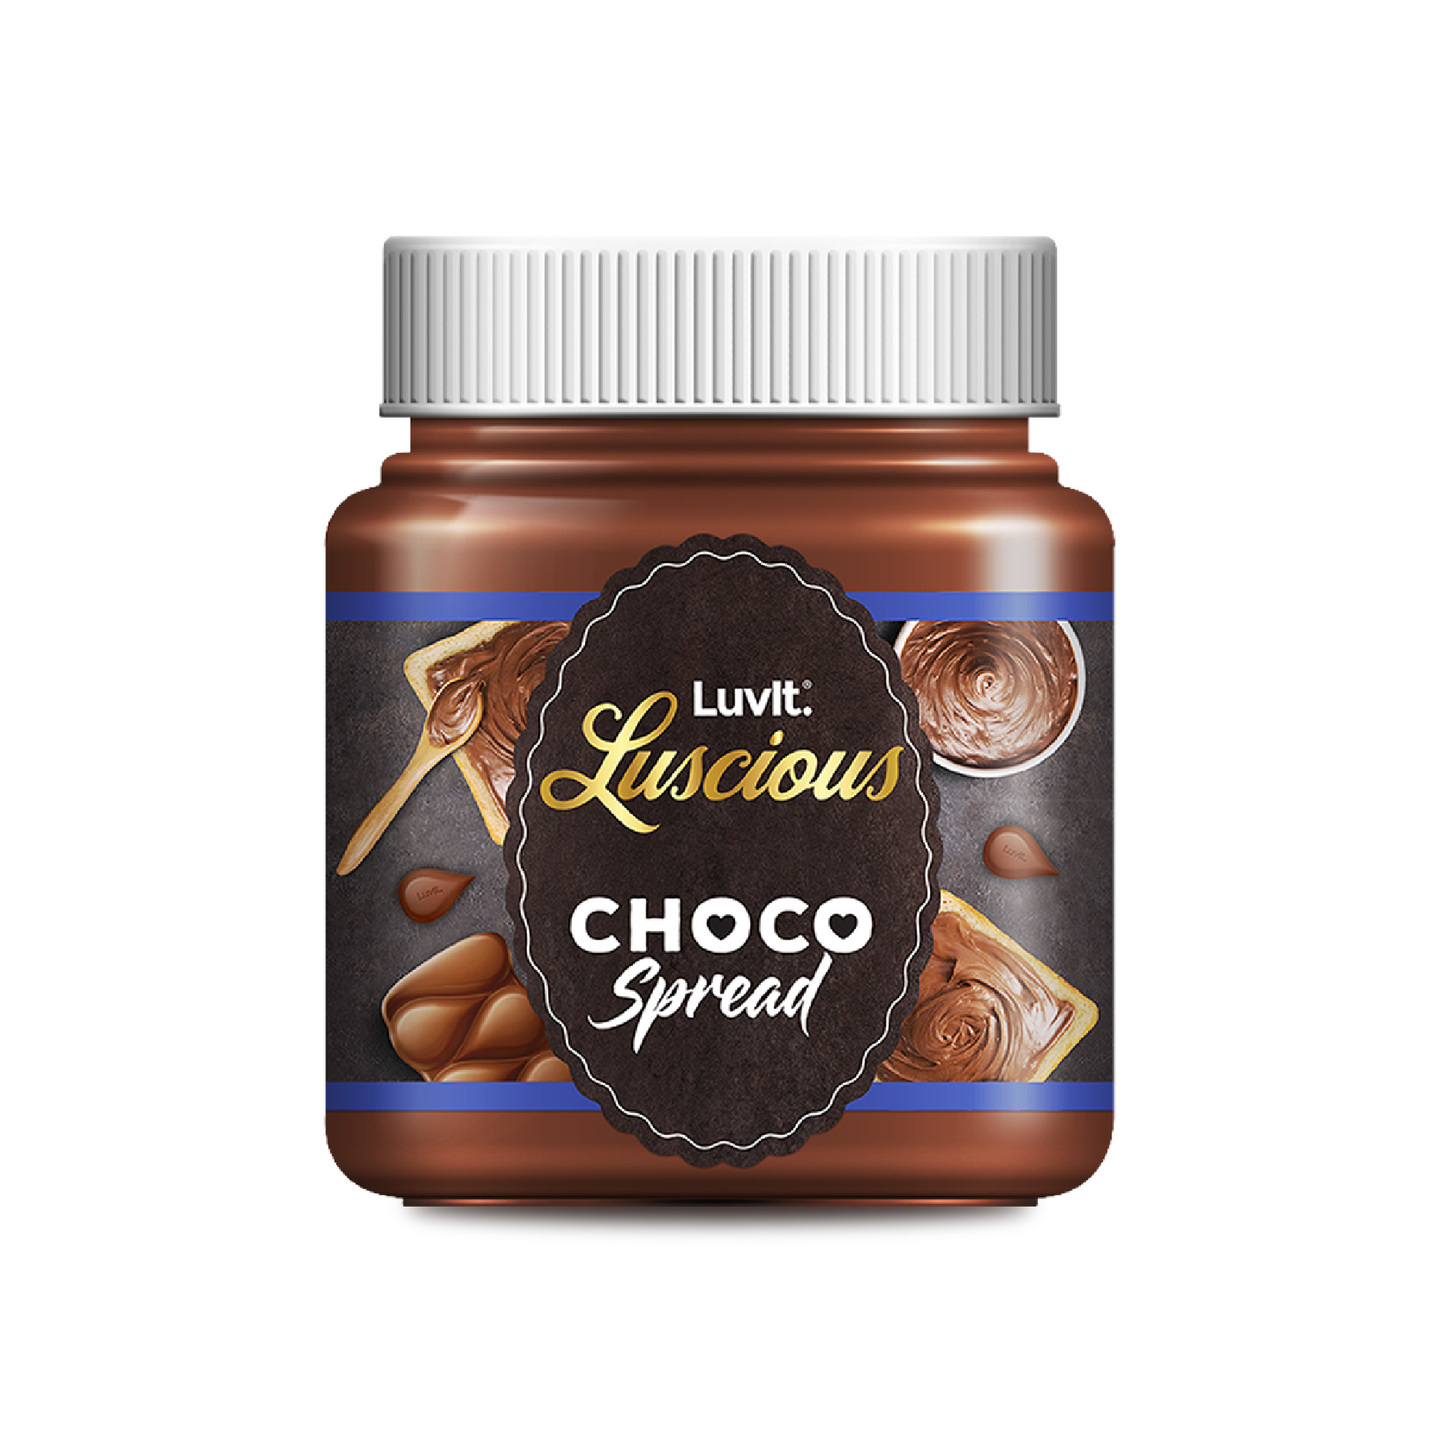 Luvit Luscious Choco spread